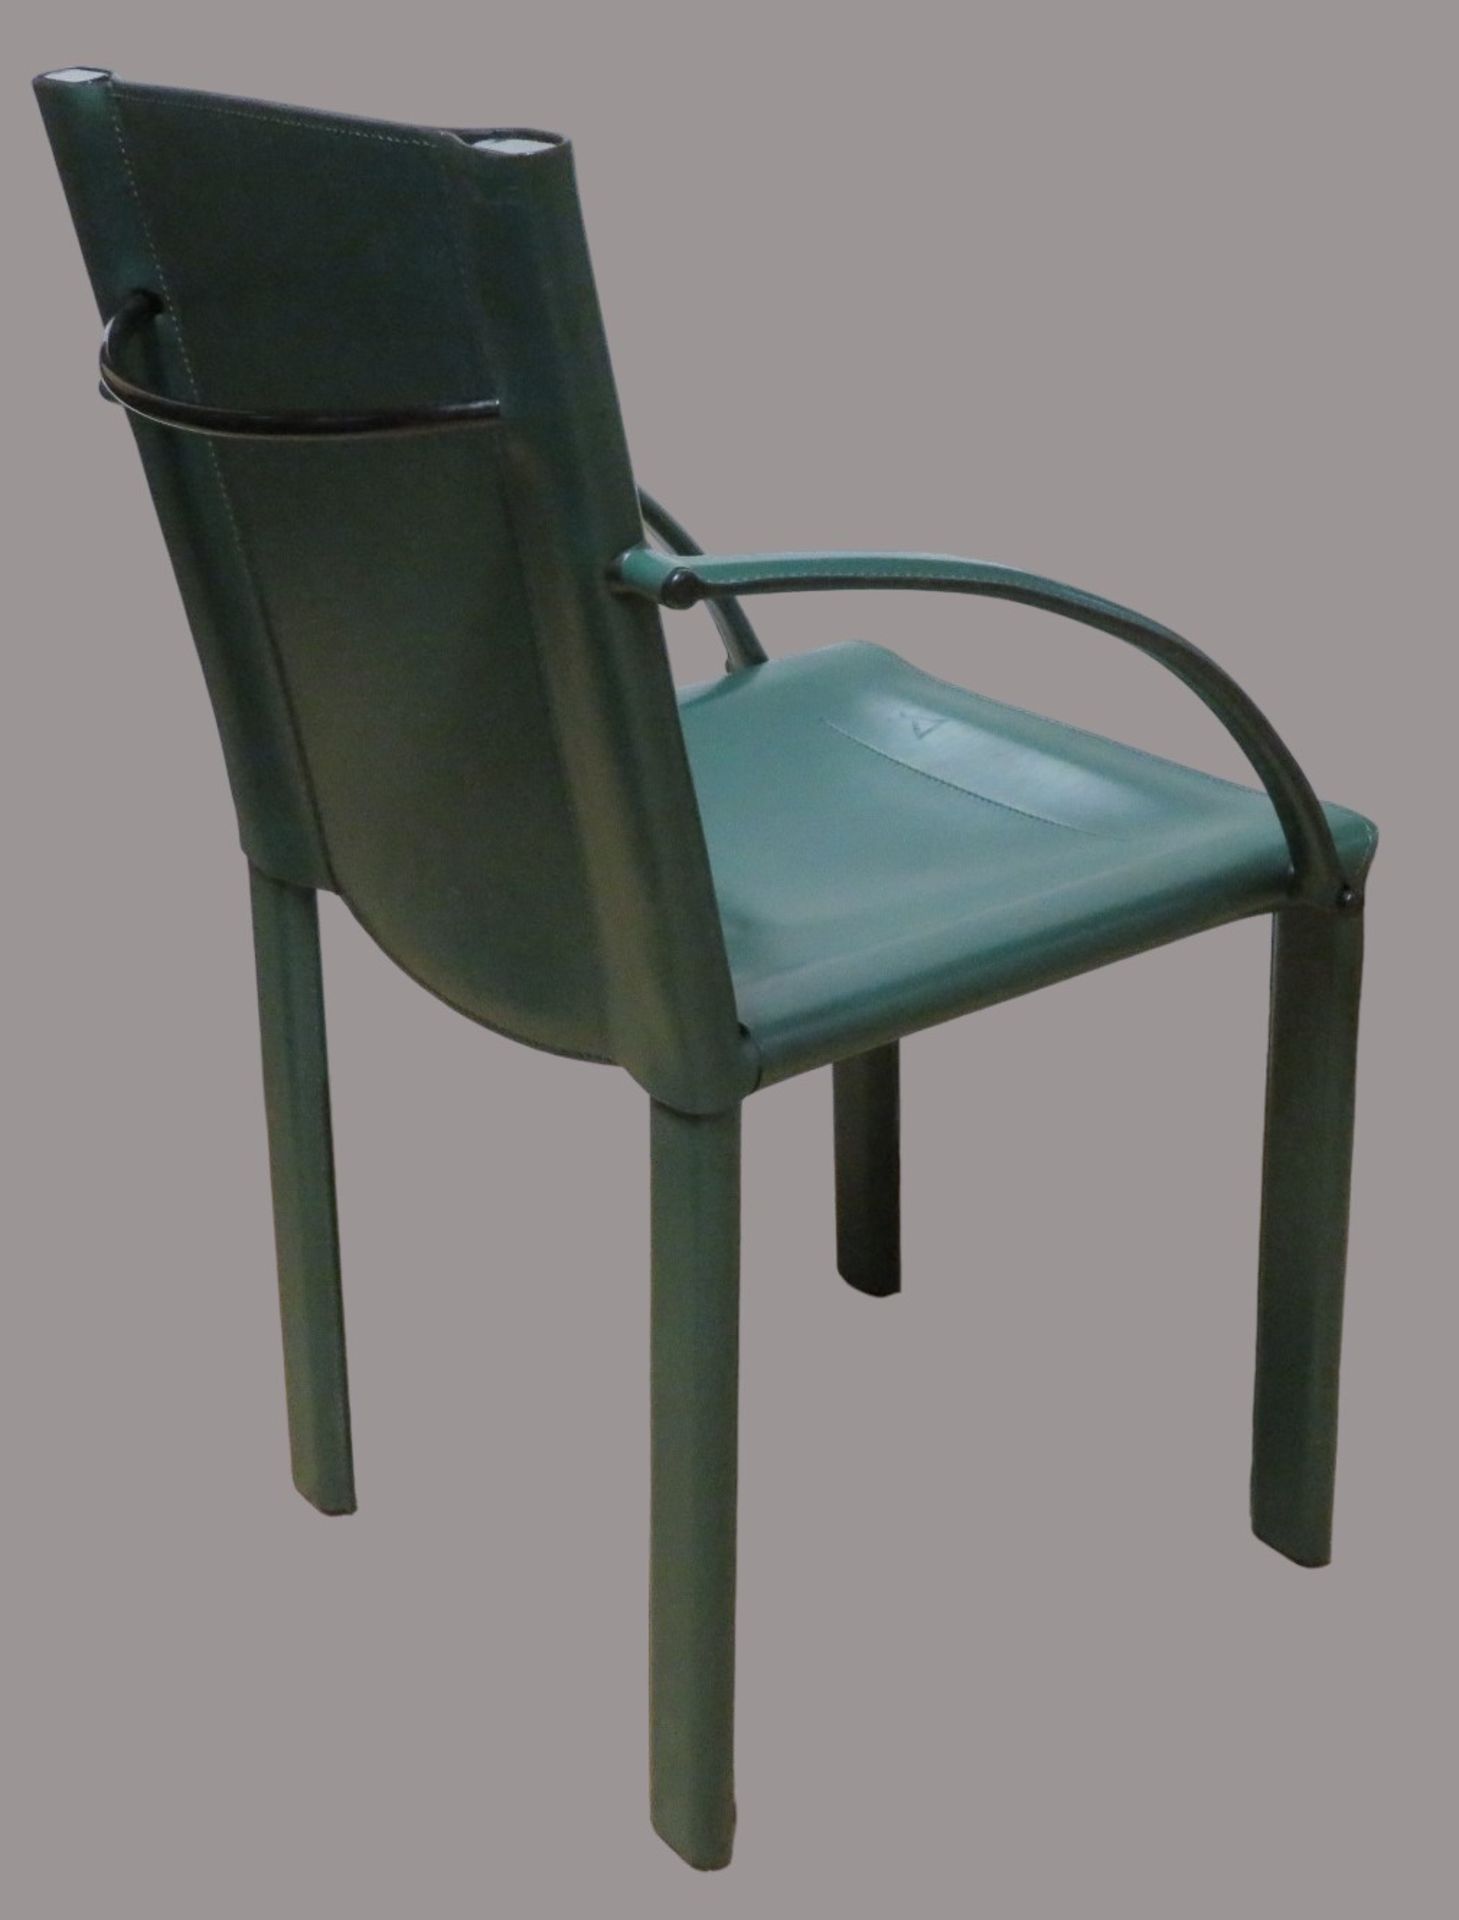 2 Designer Armlehnstühle, geschwärztes Metall mit grünem Lederbezug, gem. "Matteo Grassi", Gebrauch - Image 2 of 3